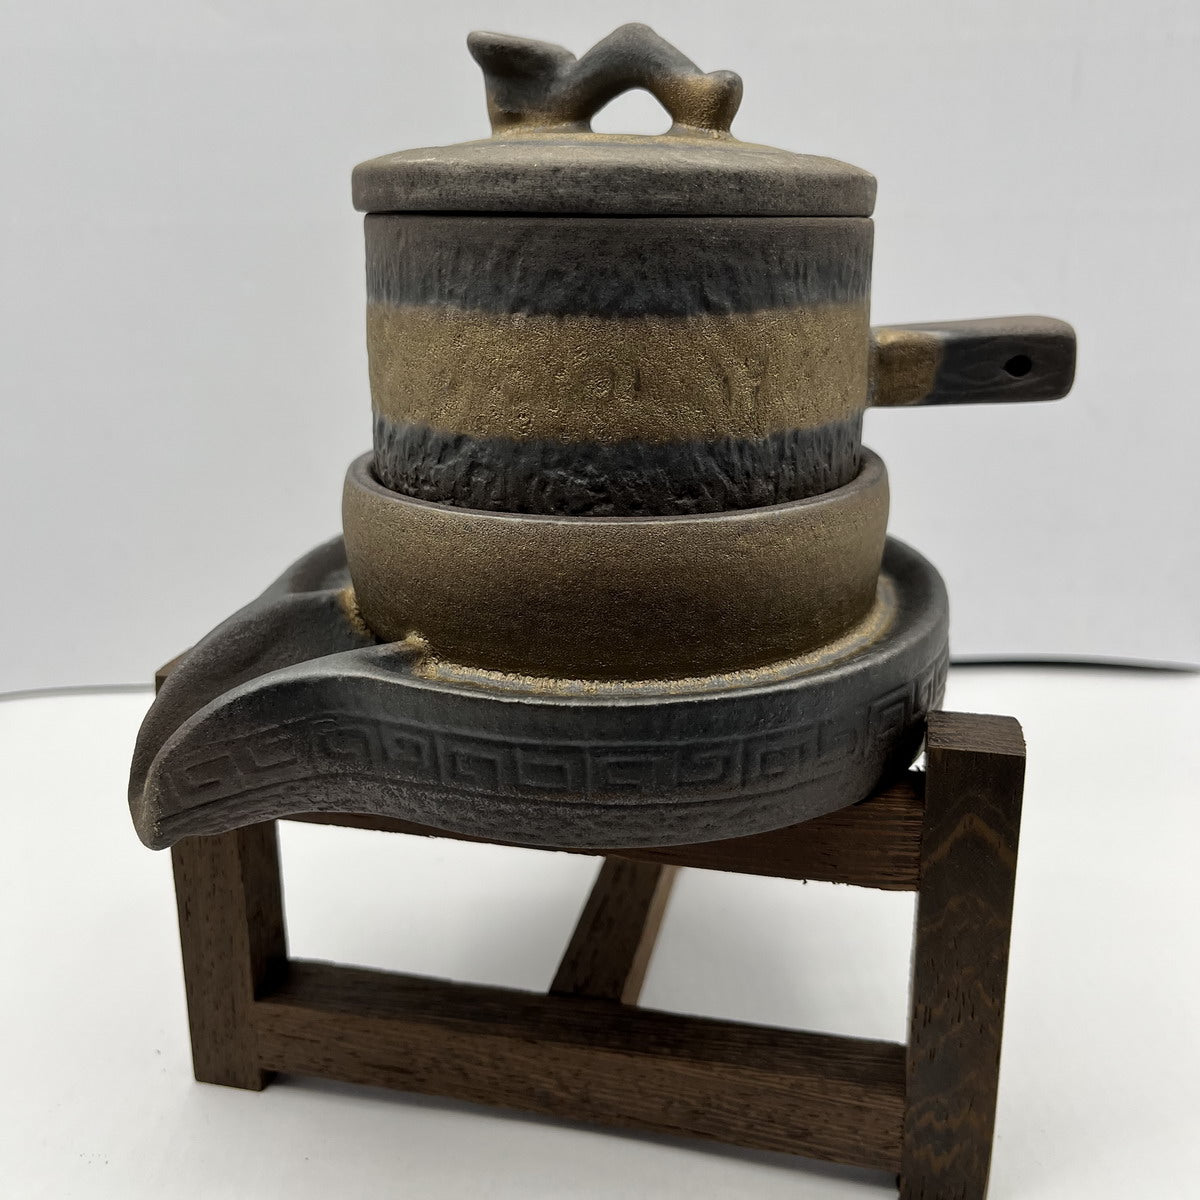 Gilt Stone Mill Semi-Automatic Gift Tea Set - Taishan Tea Club